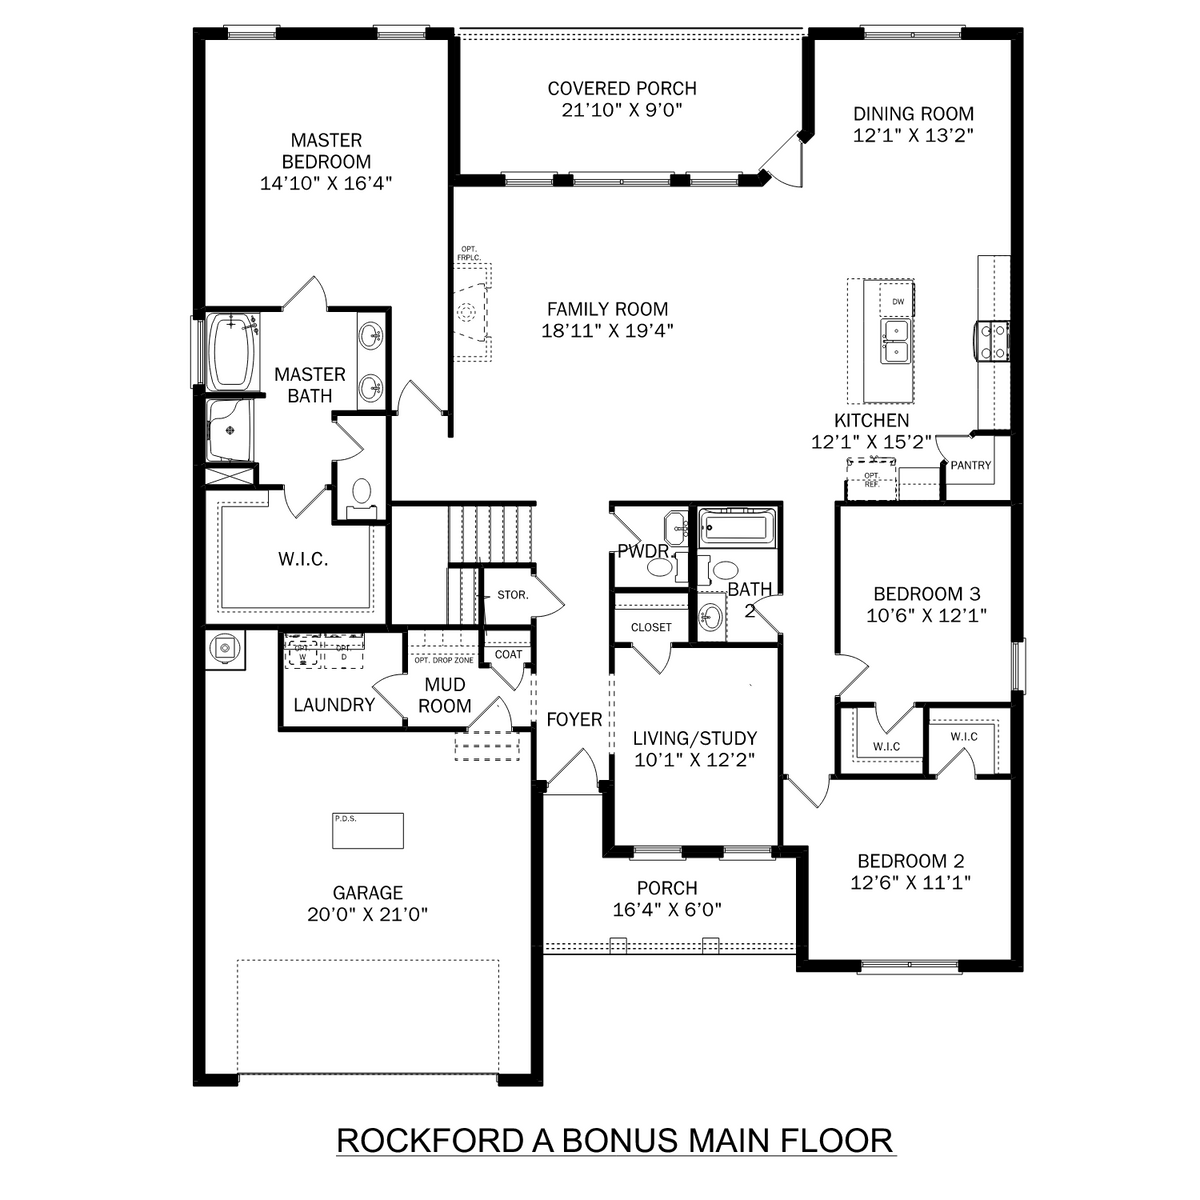 1 - The Rockford with Bonus buildable floor plan layout in Davidson Homes' Barnett's Crossing community.